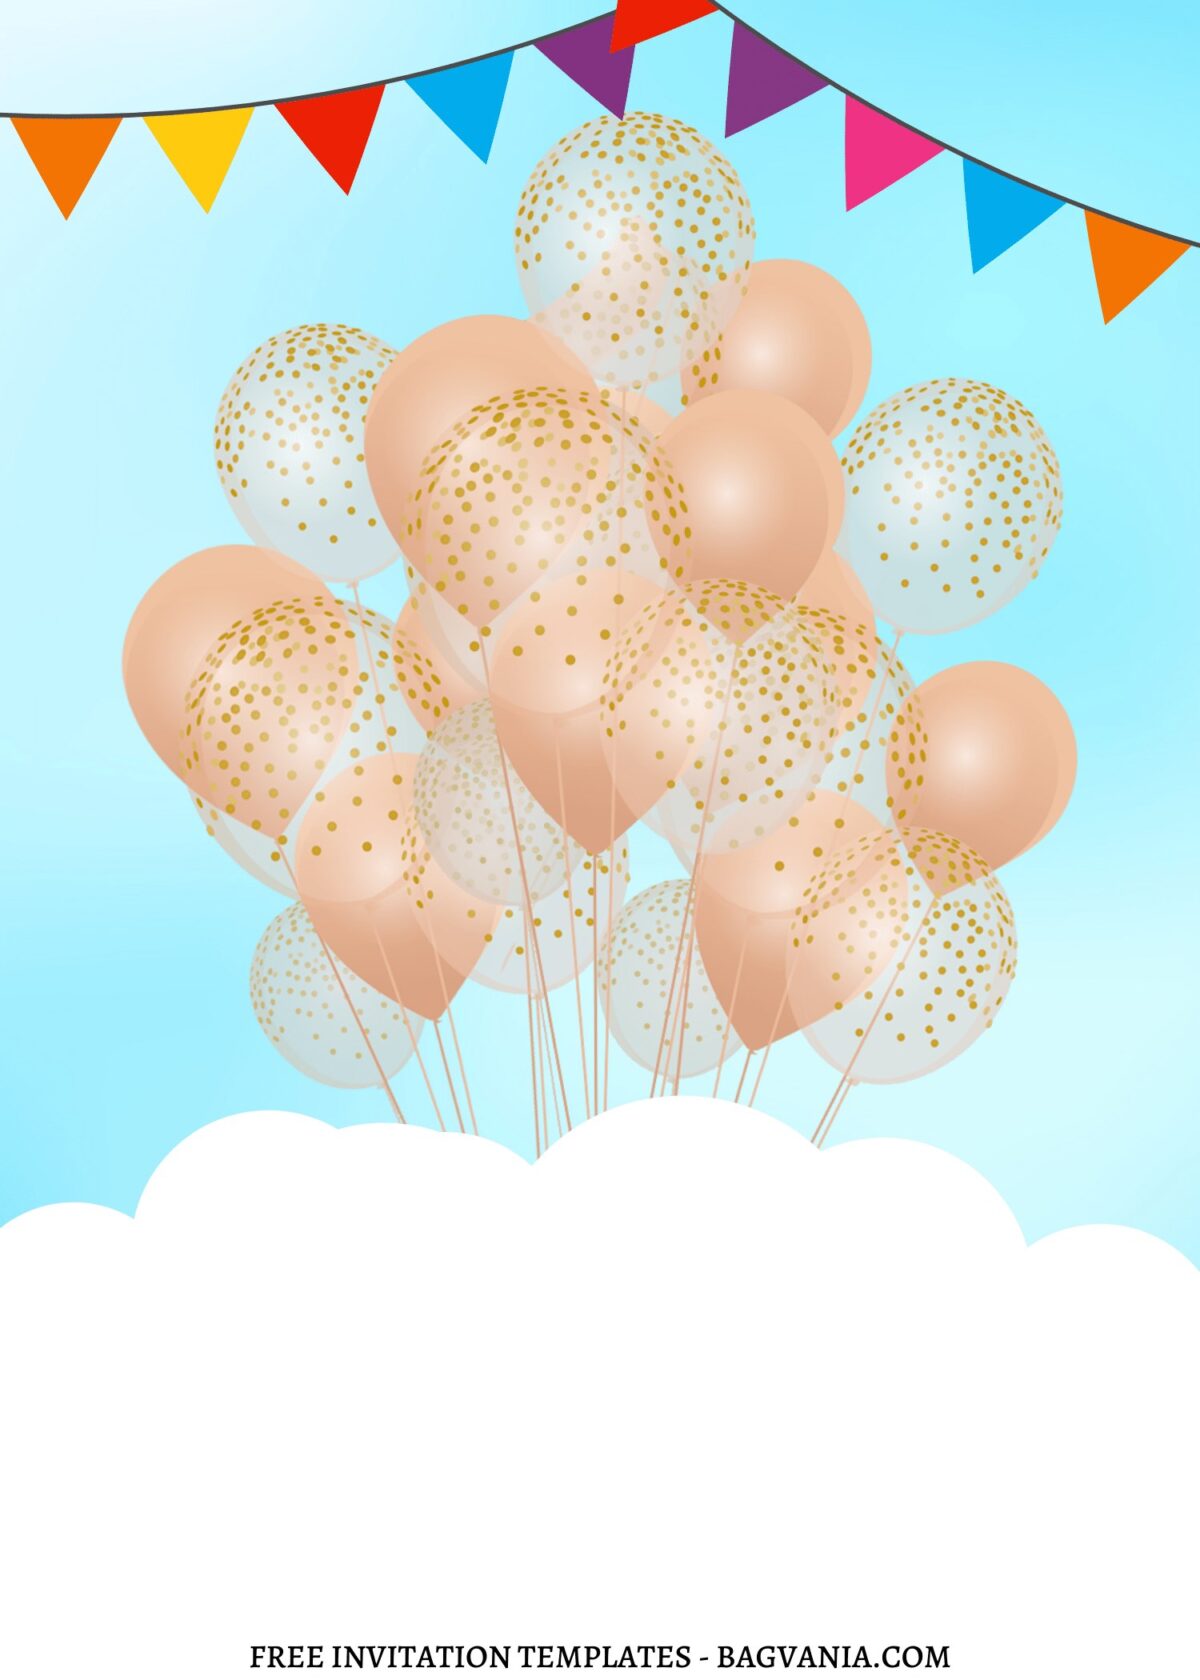 FREE EDITABLE - 10+ Safari Hot Air Balloon Canva Birthday Invitation Templates with elegant balloons